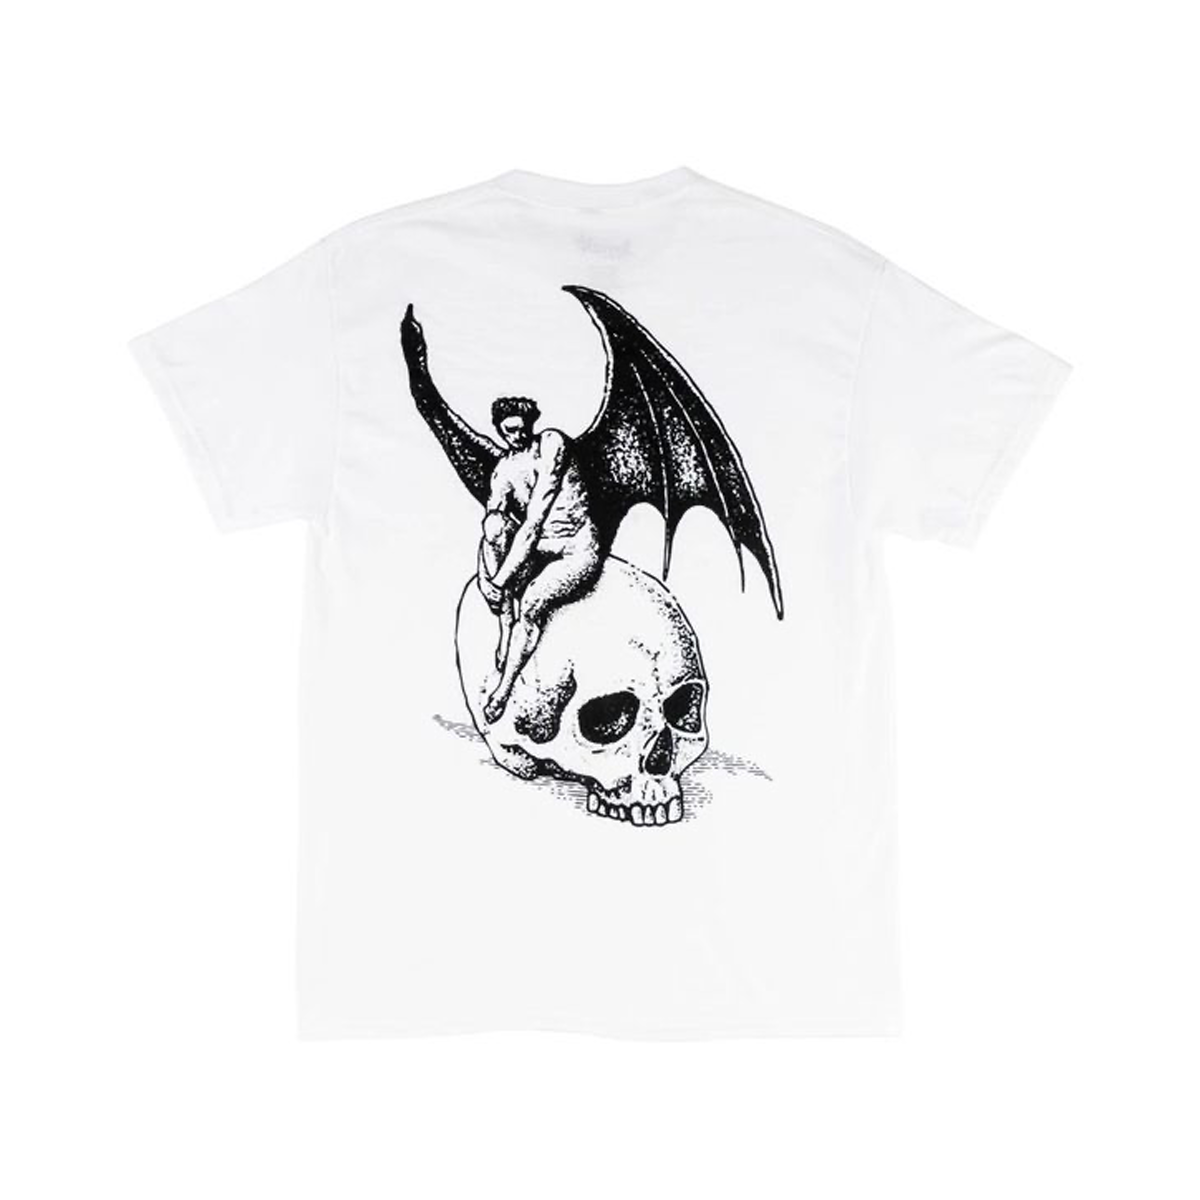 Welcome Nephilim T-Shirt - White / Black